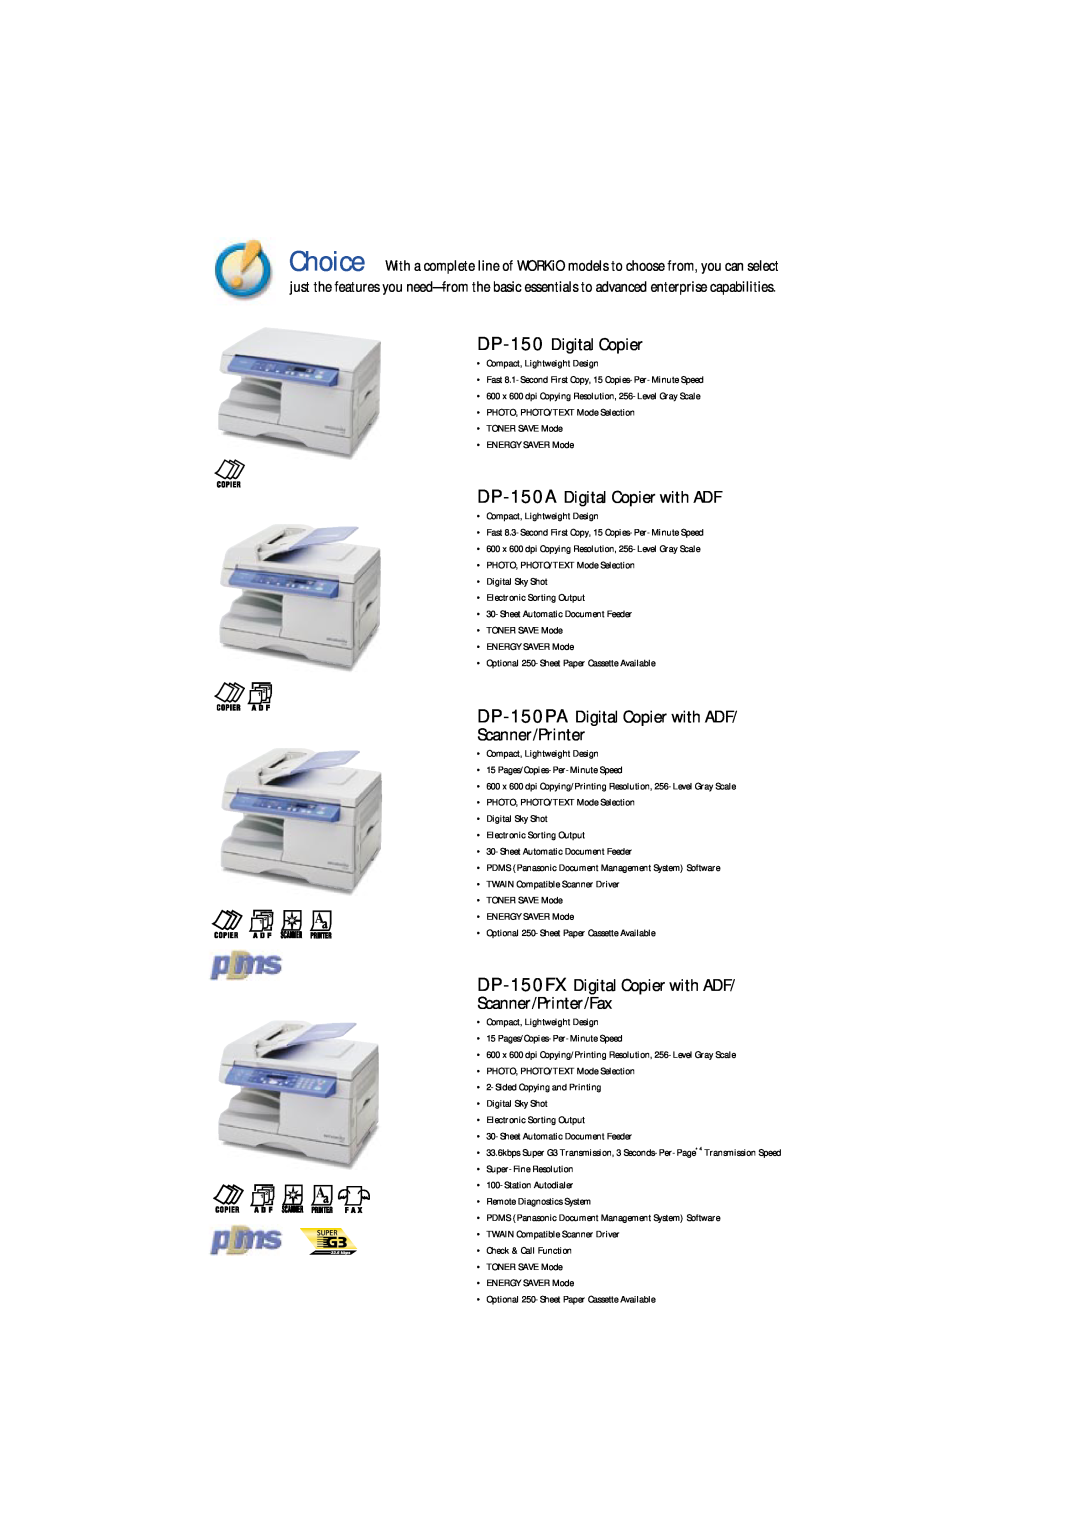 Panasonic DP150 DP-150 Digital Copier, DP-150A Digital Copier with ADF, DP-150PA Digital Copier with ADF Scanner/Printer 